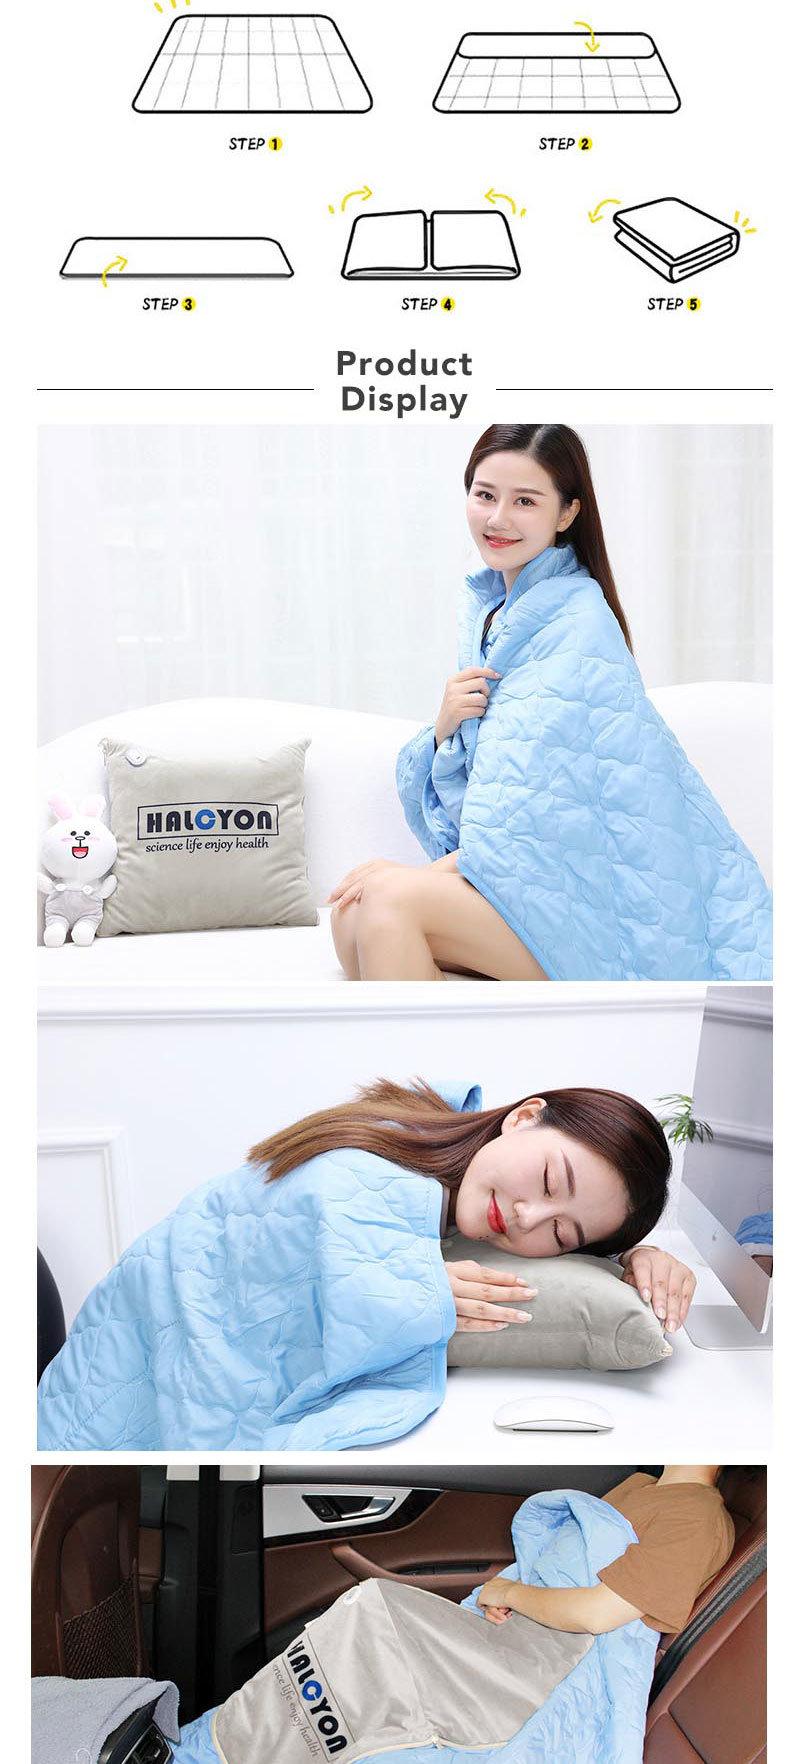 Hezheng OEM Logo Custom Printing Travel Use Animal Printing Pillow Blanket 2 in 1 Massage